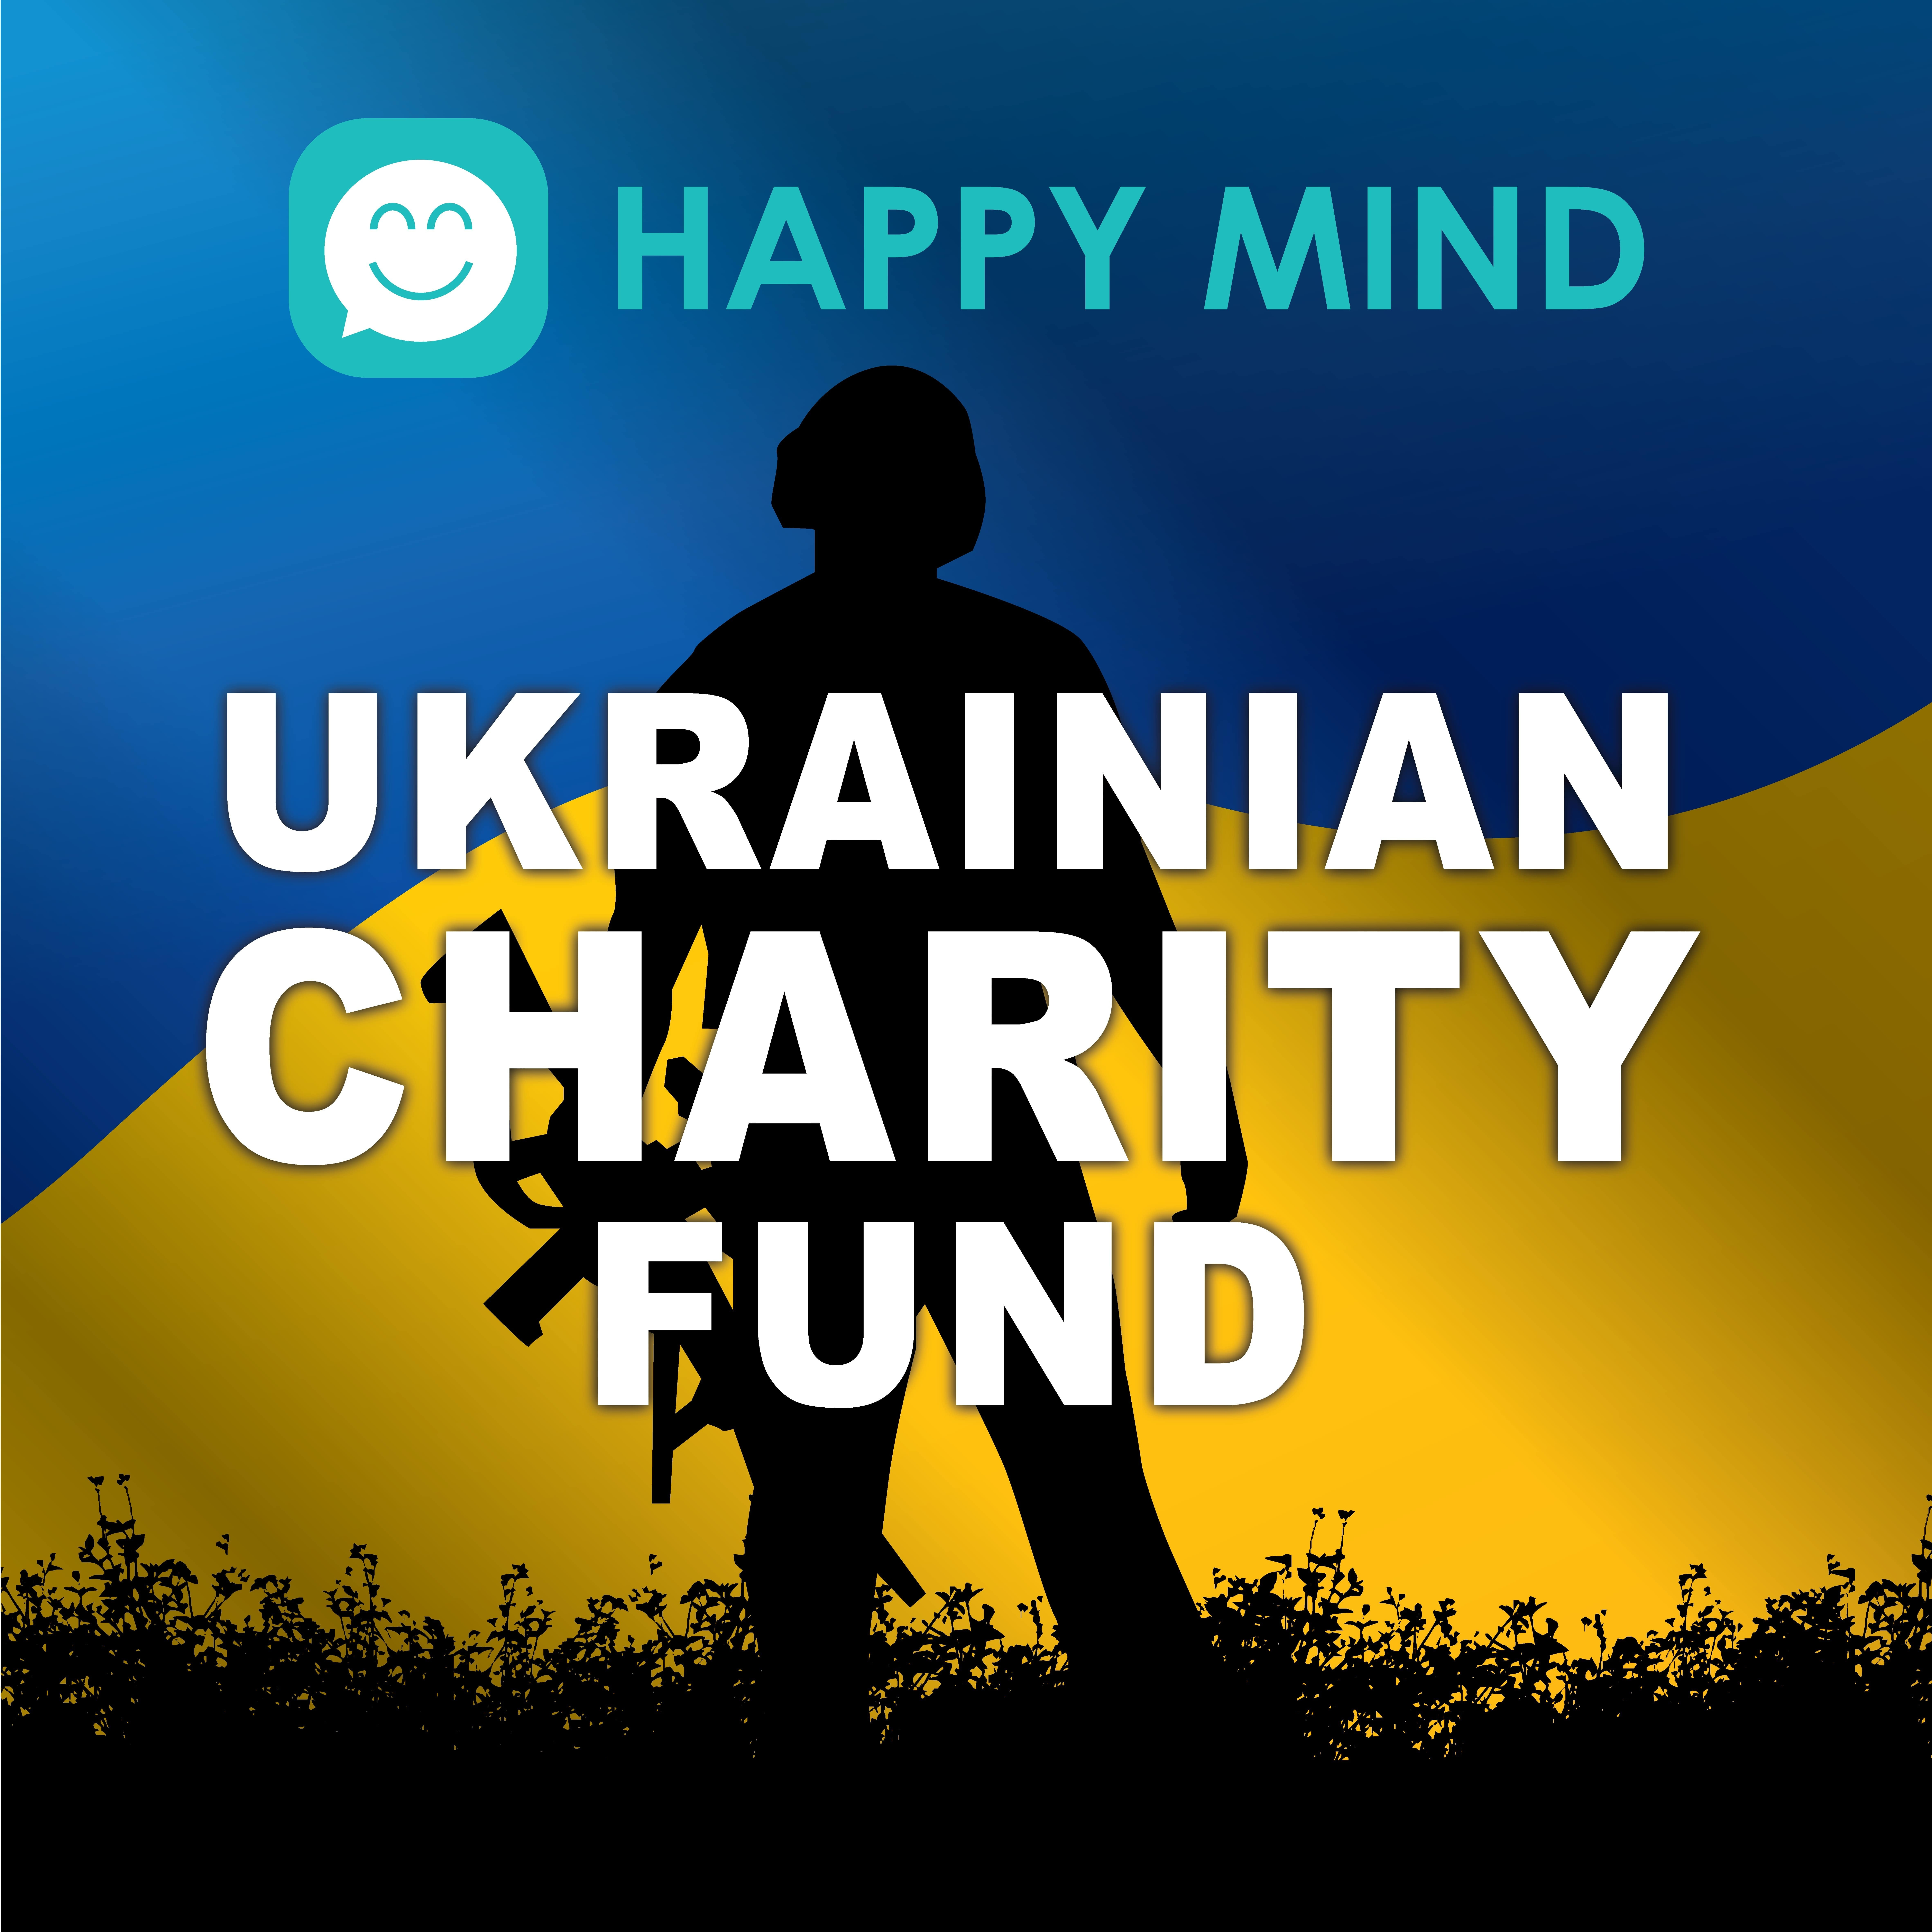 Ukrainian Charity Fund Happy Mind Help